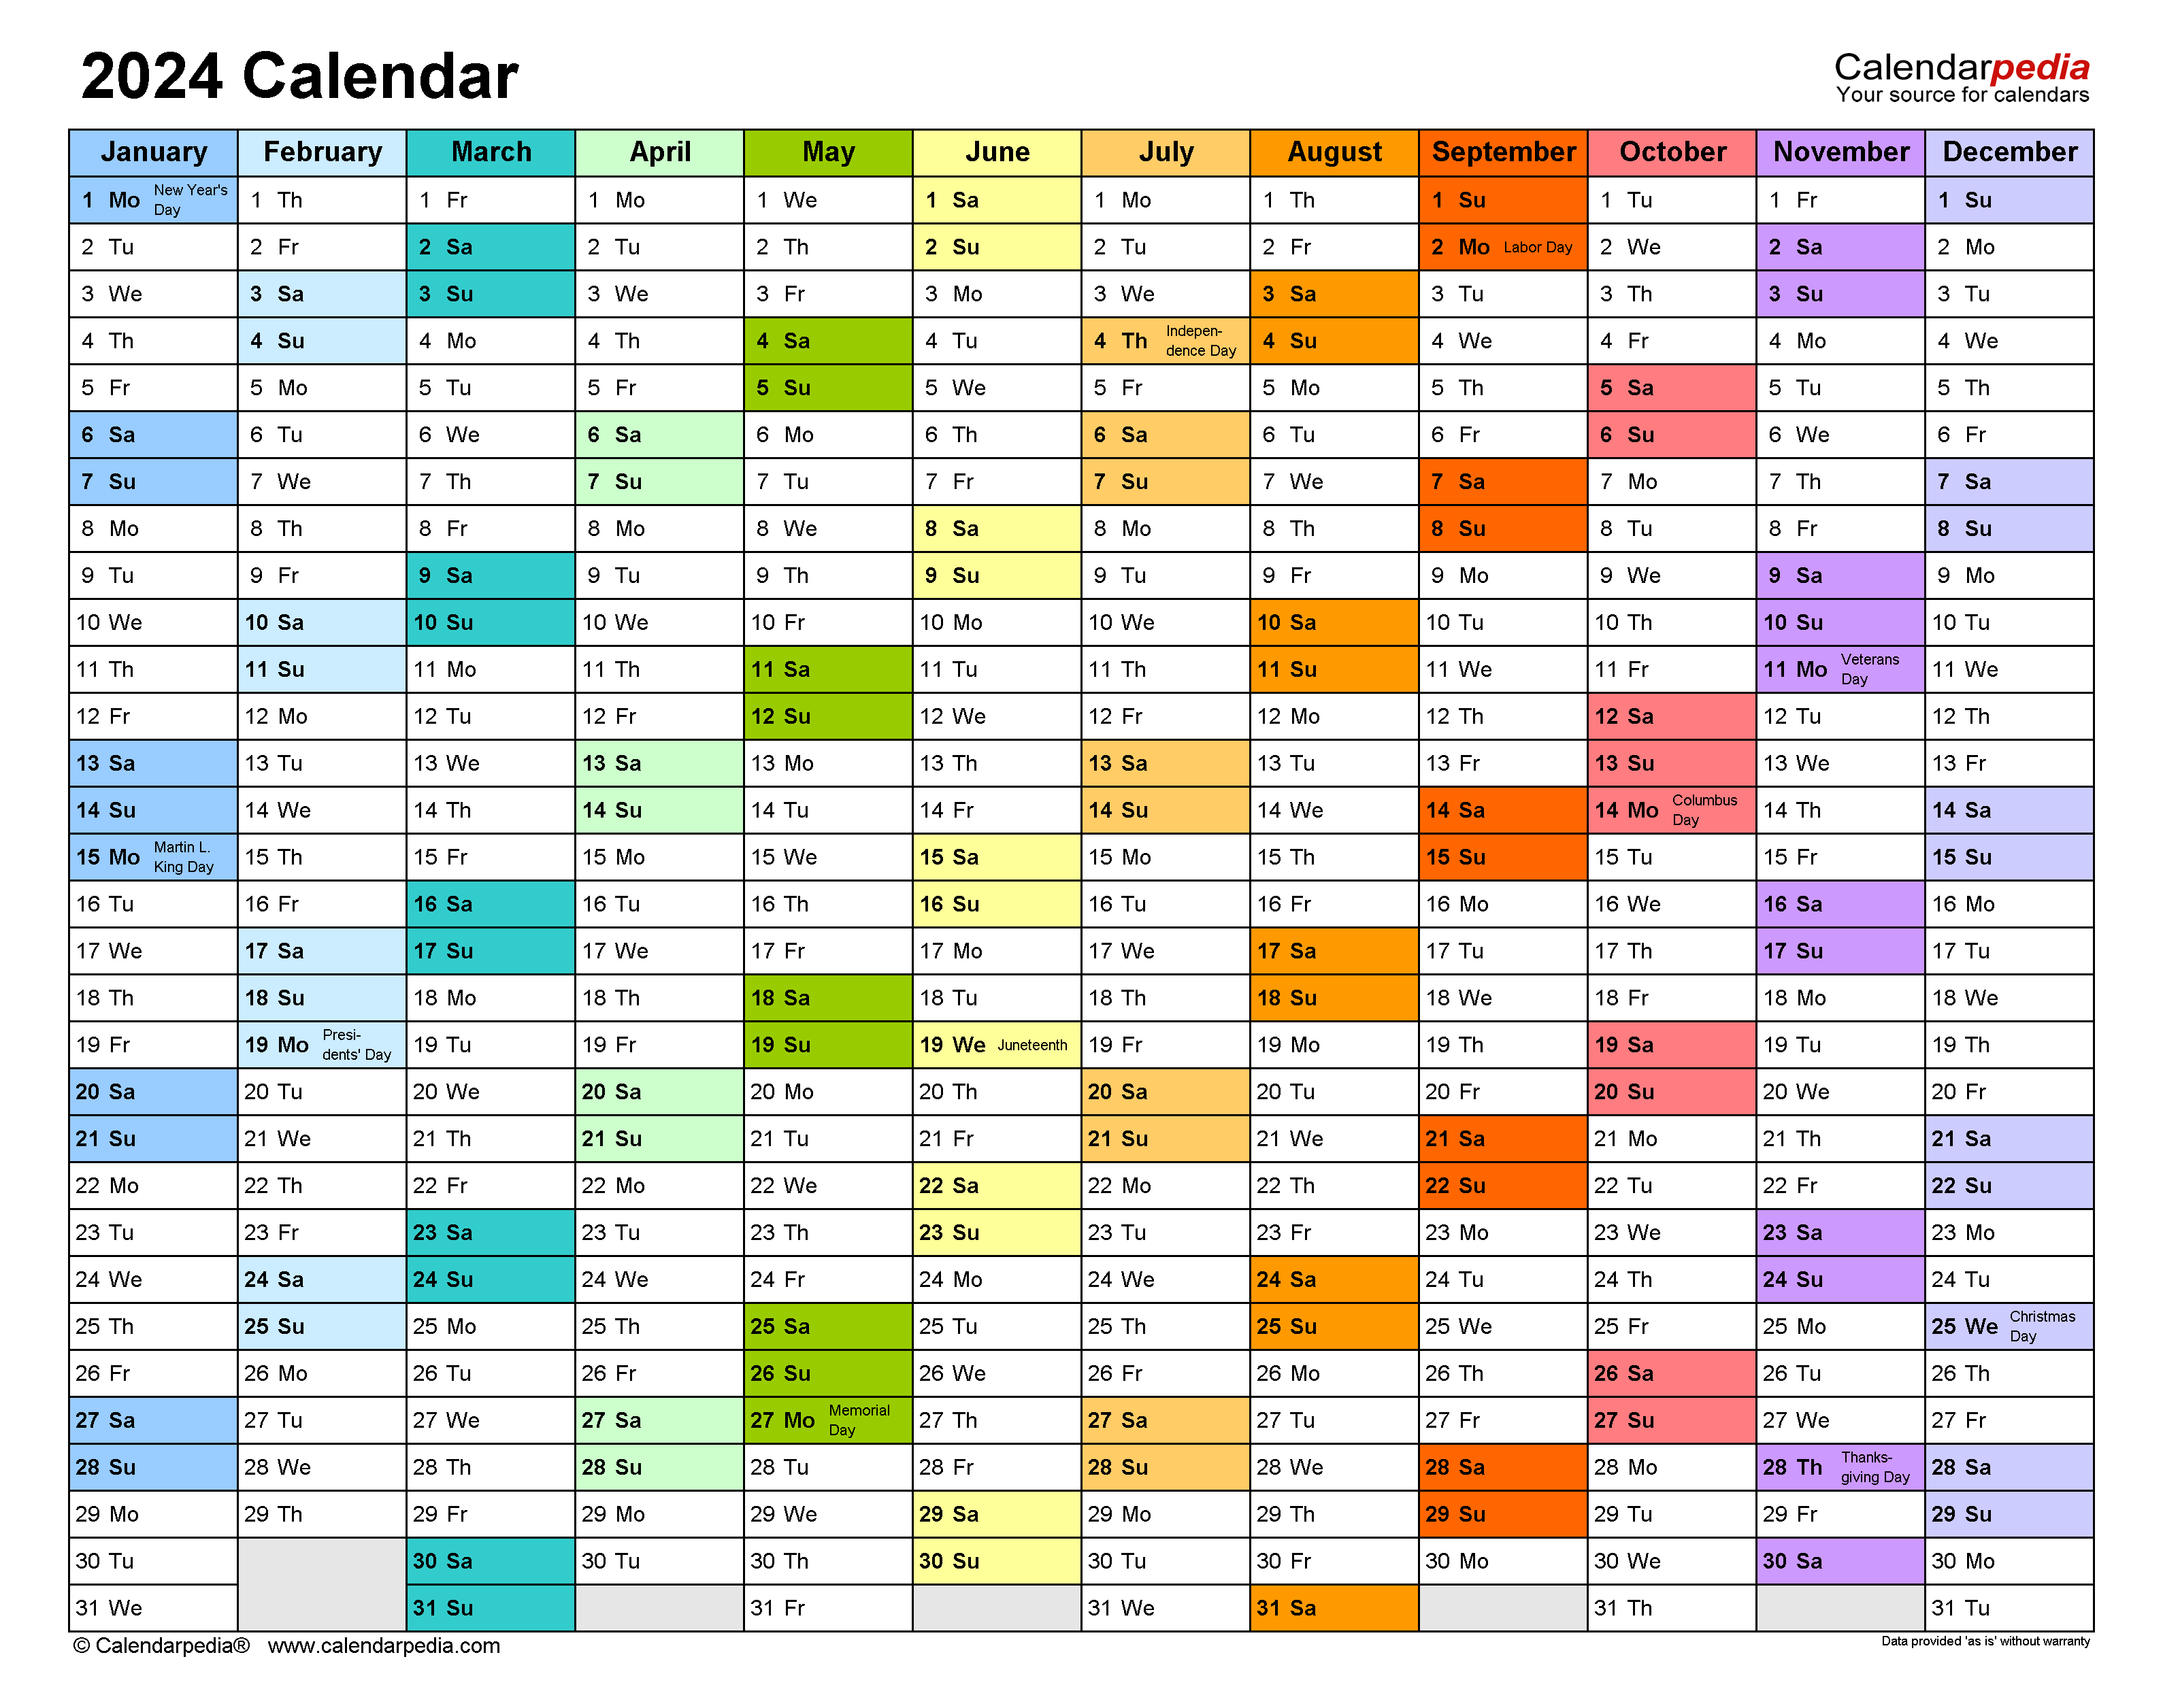 2024 Calendar - Free Printable Word Templates - Calendarpedia for Printable 2024 Calendar Word